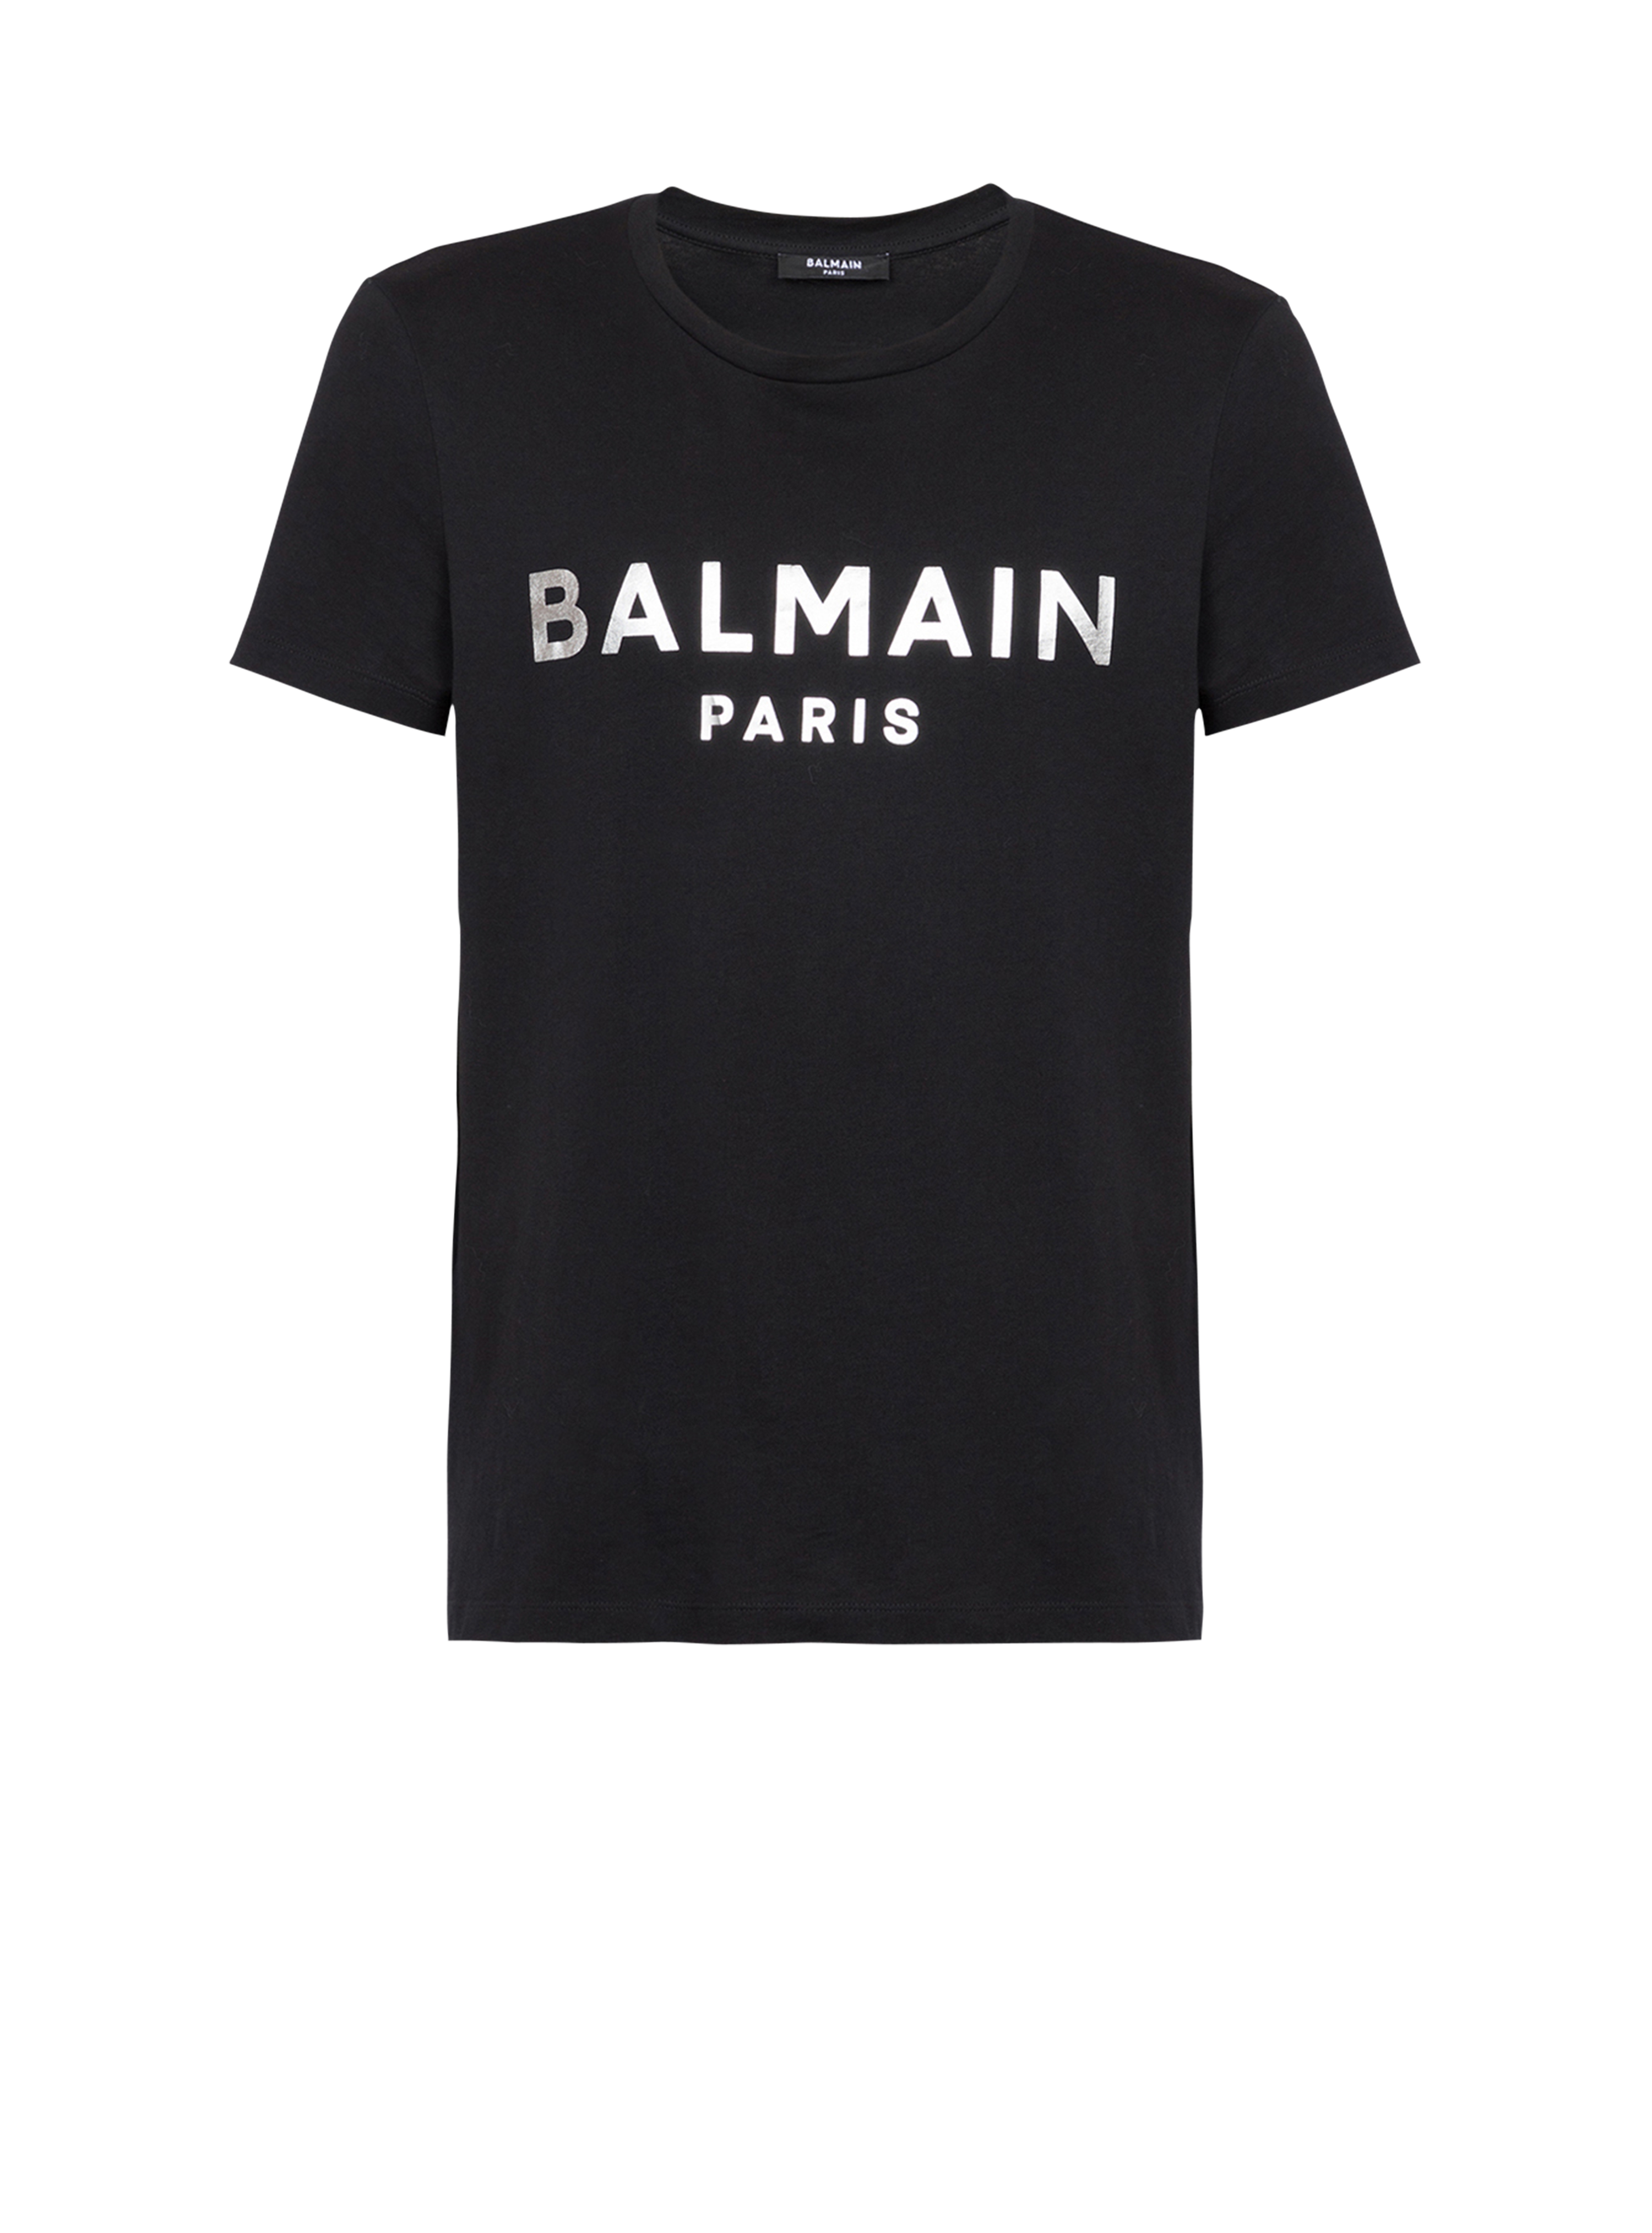 Eco-designed cotton T-shirt with Balmain Paris logo print, silver